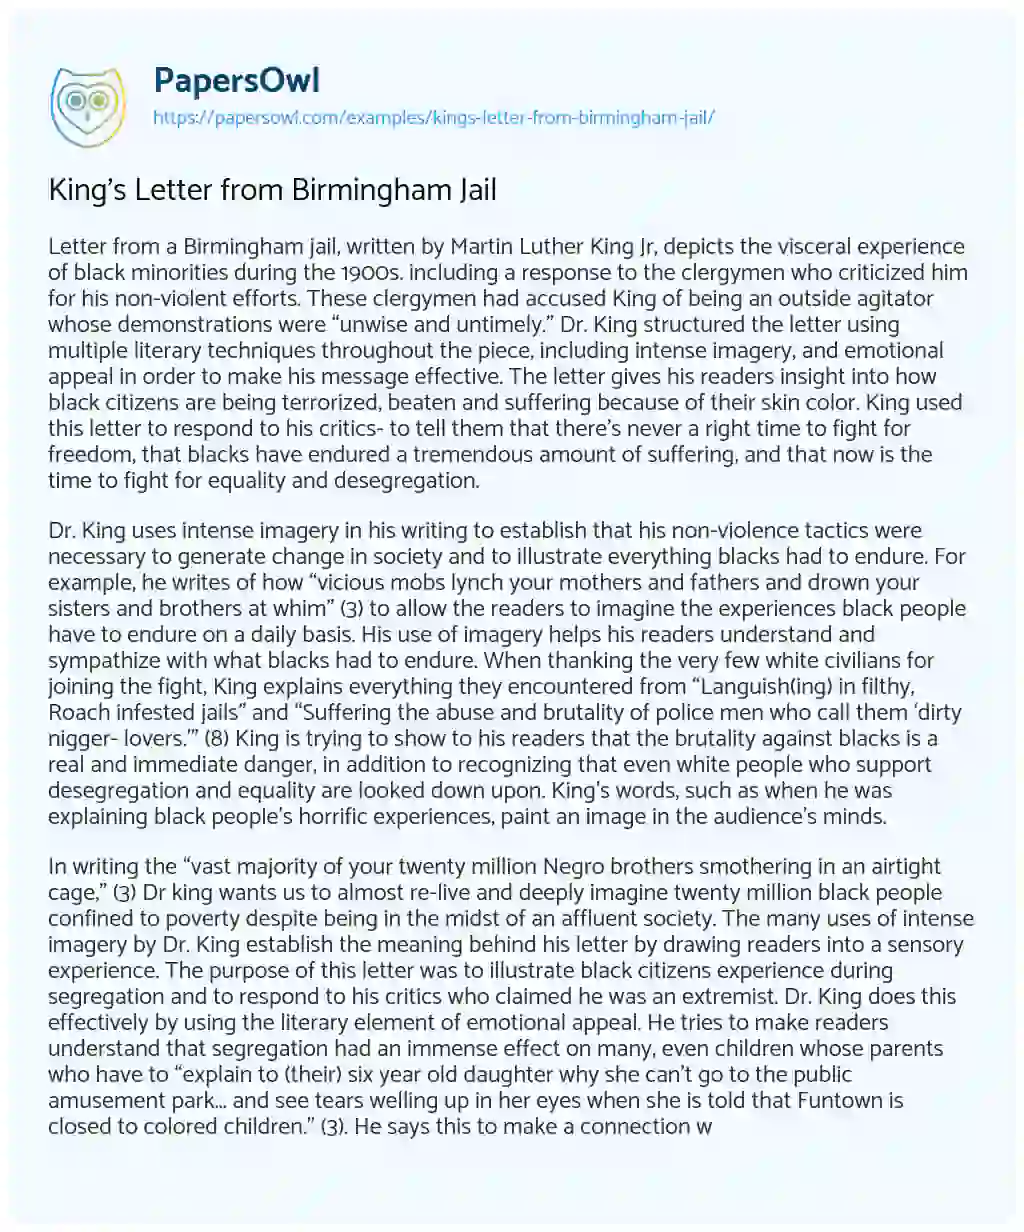 Essay on King’s Letter from Birmingham Jail